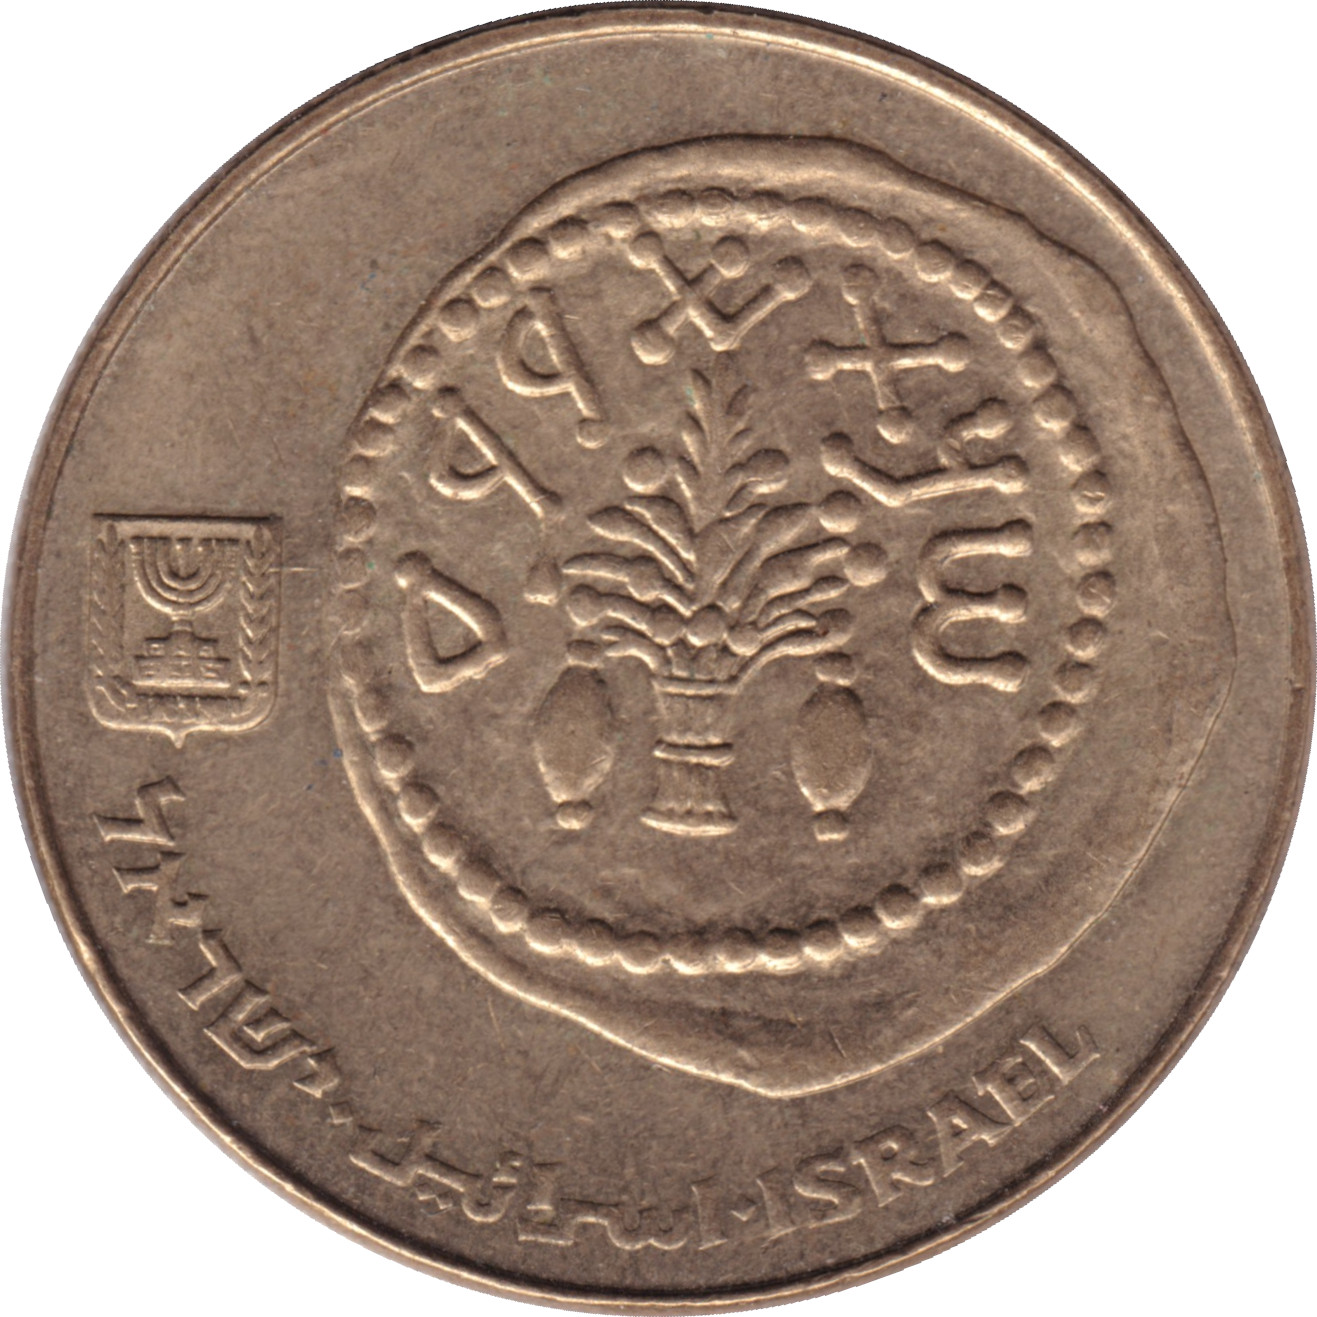 50 sheqalim - Old coin